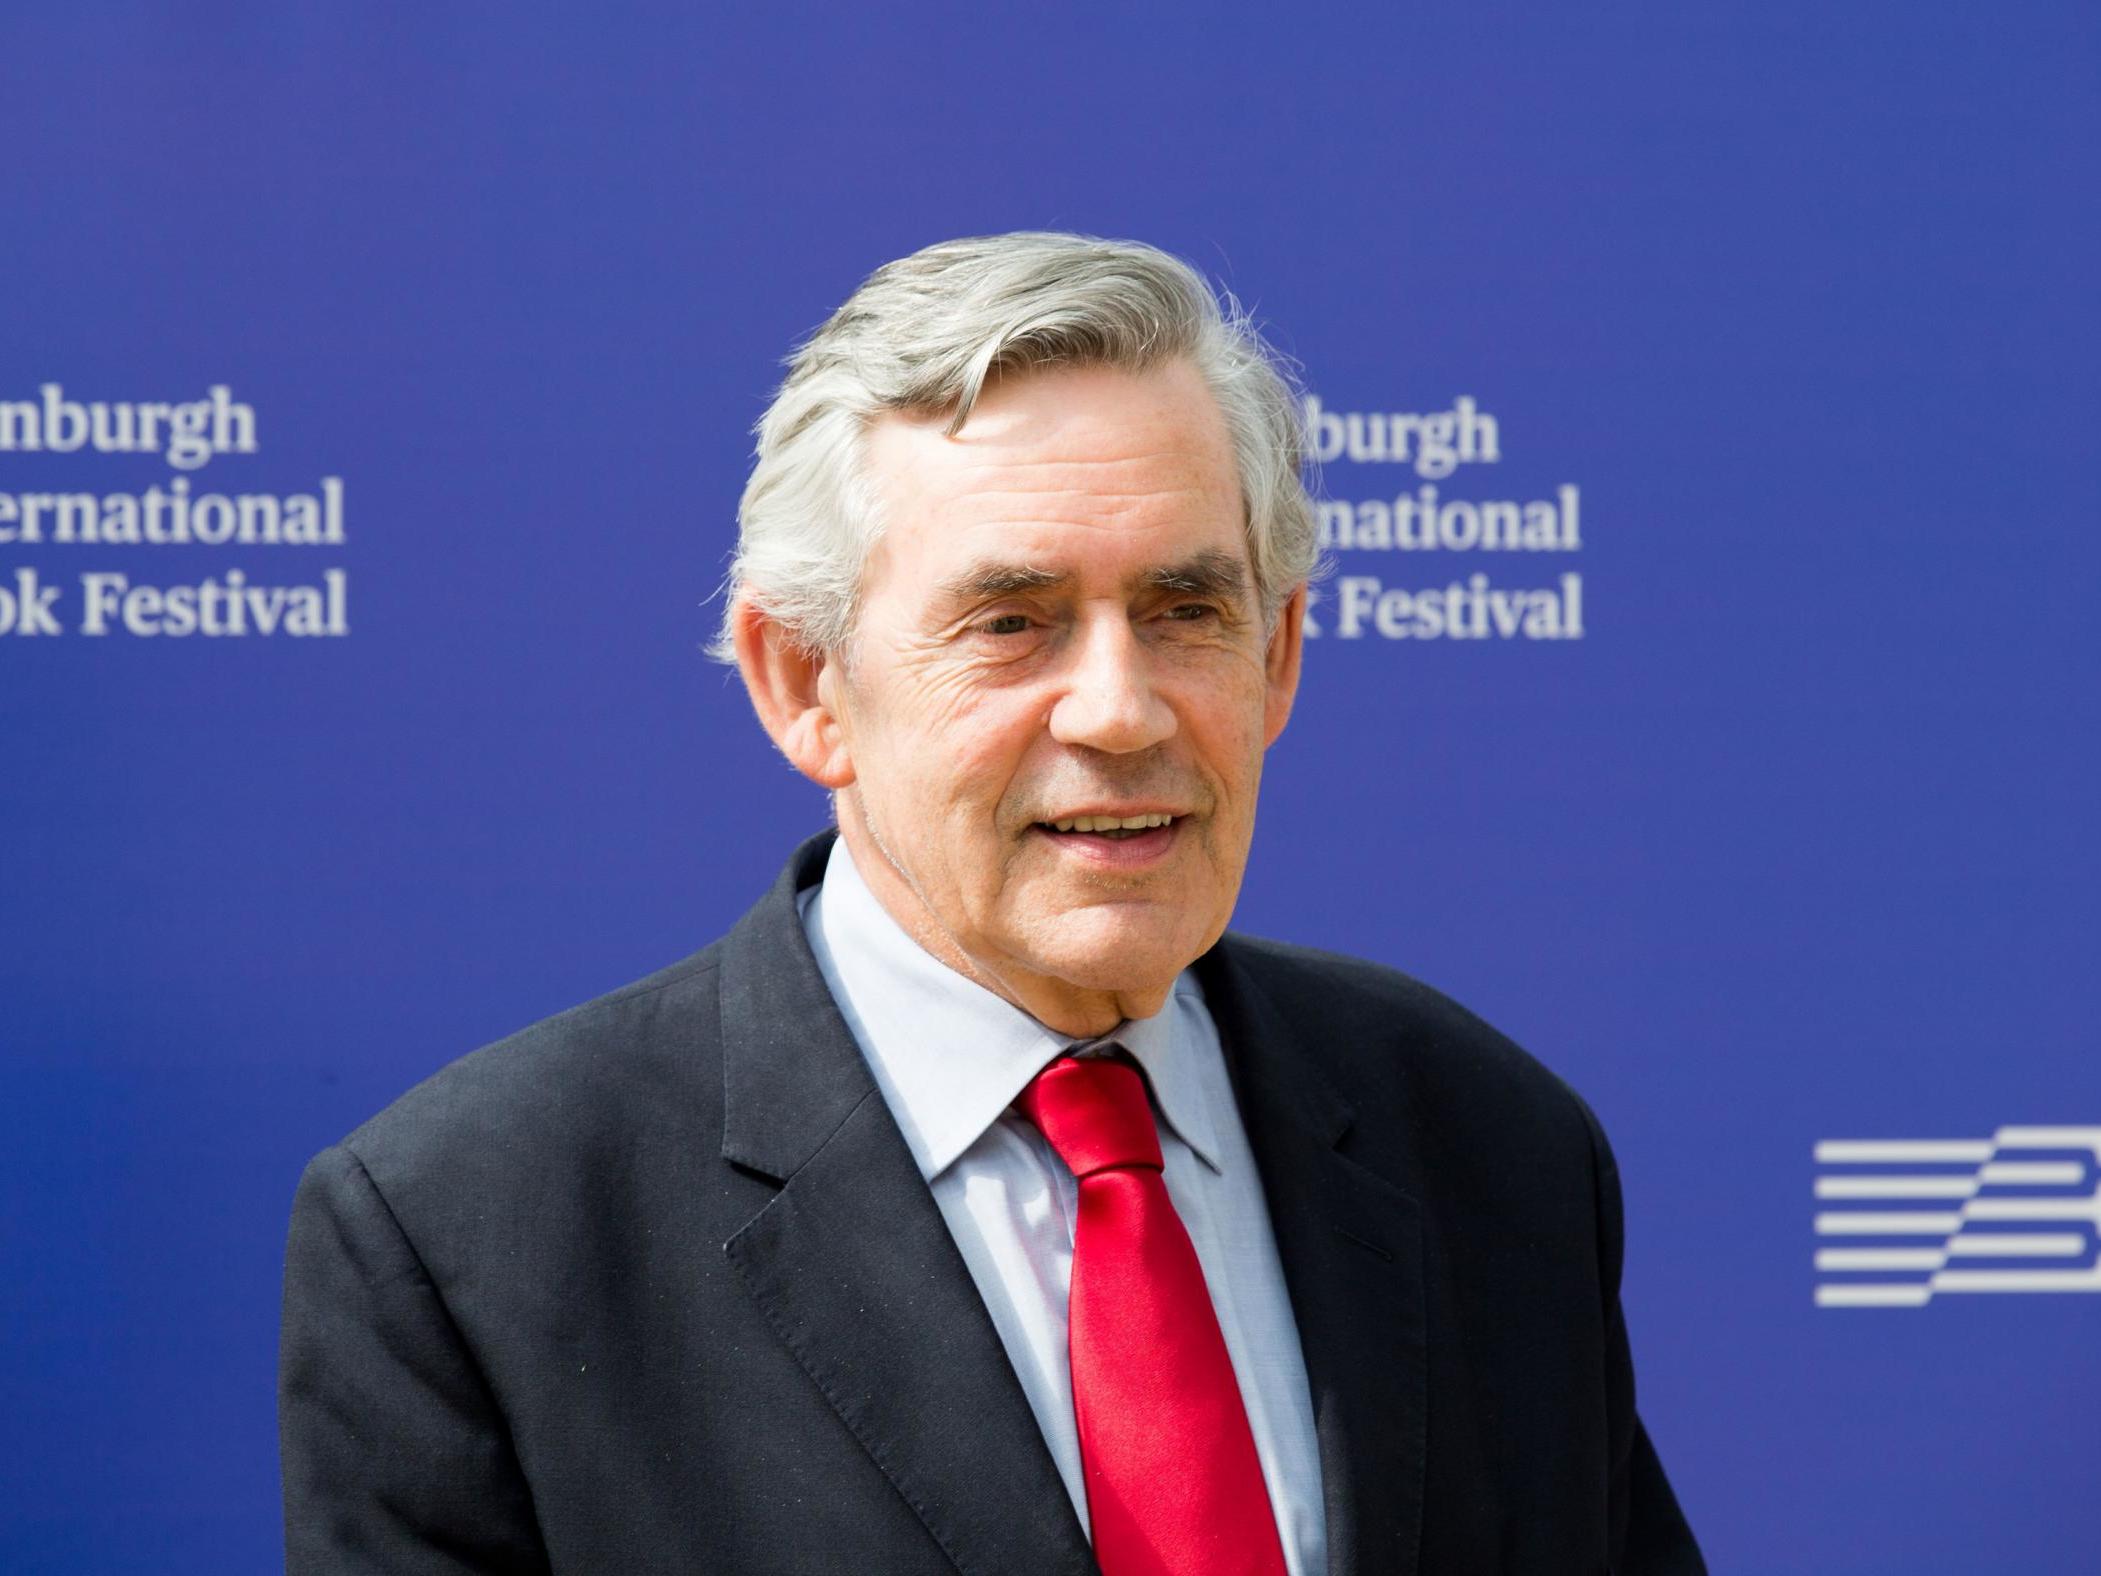 Former PM Gordon Brown appearing at the Edinburgh International Book Festival